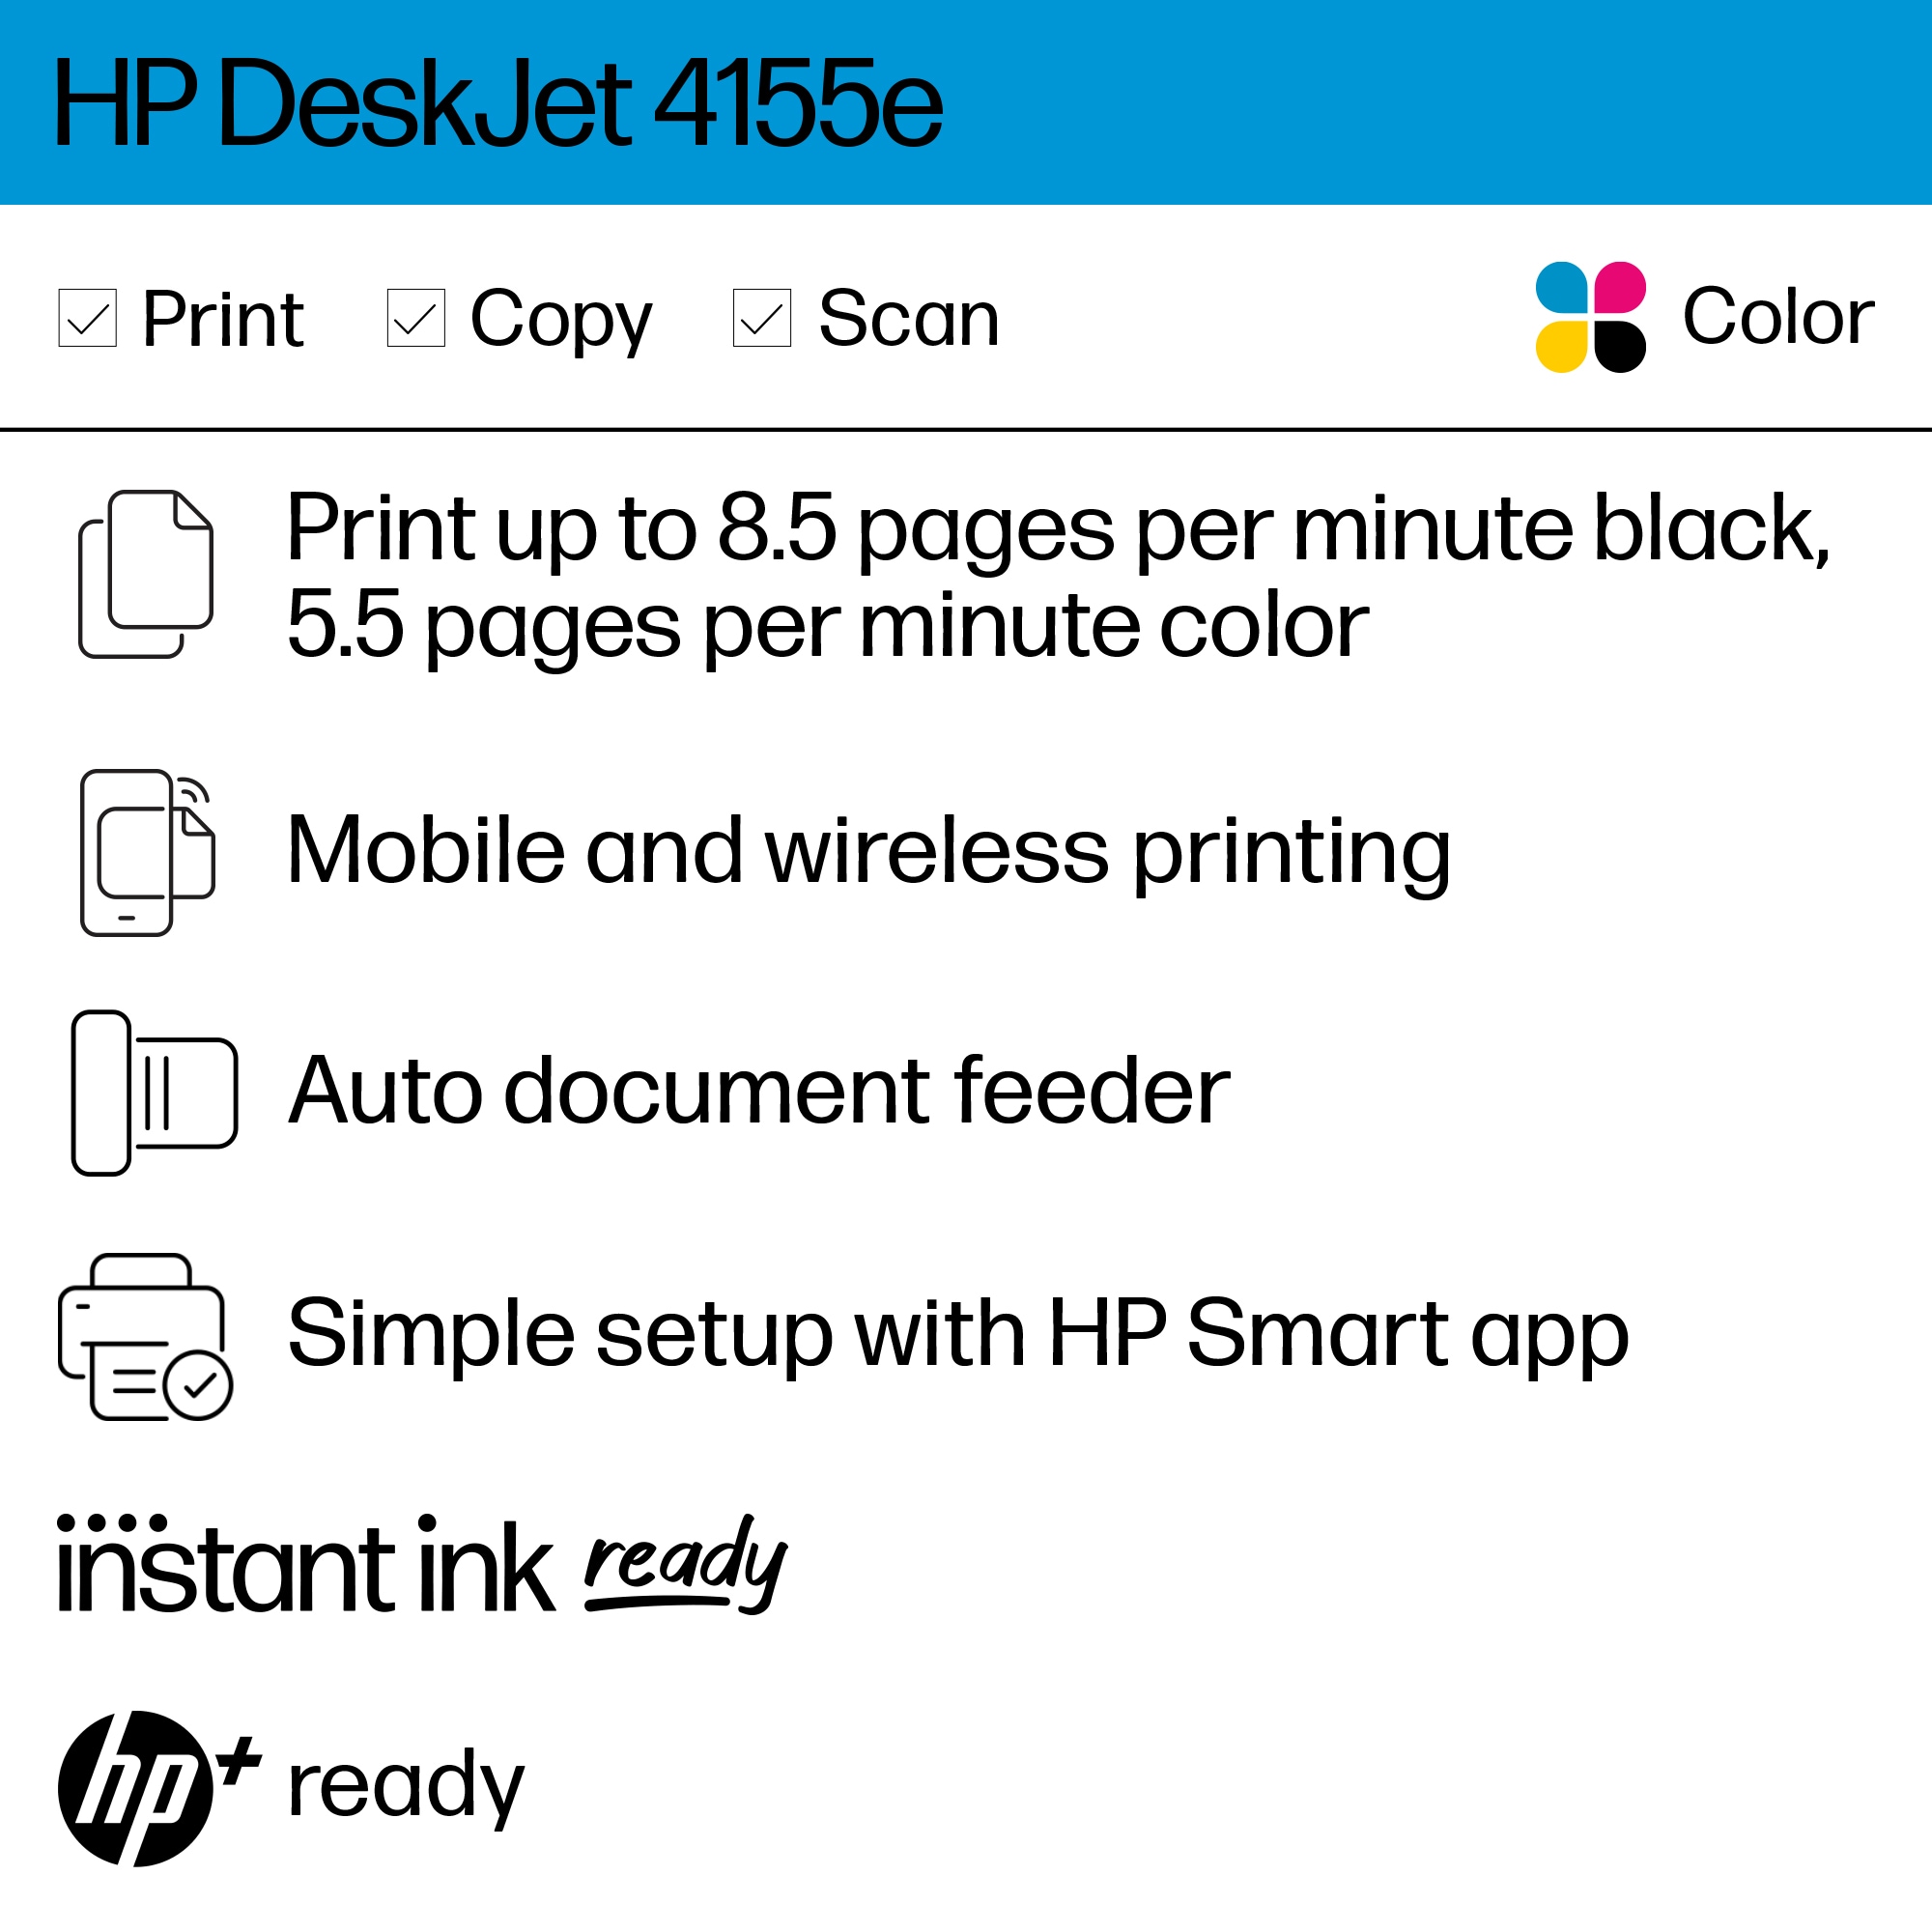 HP DeskJet 4155e All-in-One Inkjet Printer, Color Mobile Print, Copy, Scan, Send - image 5 of 7